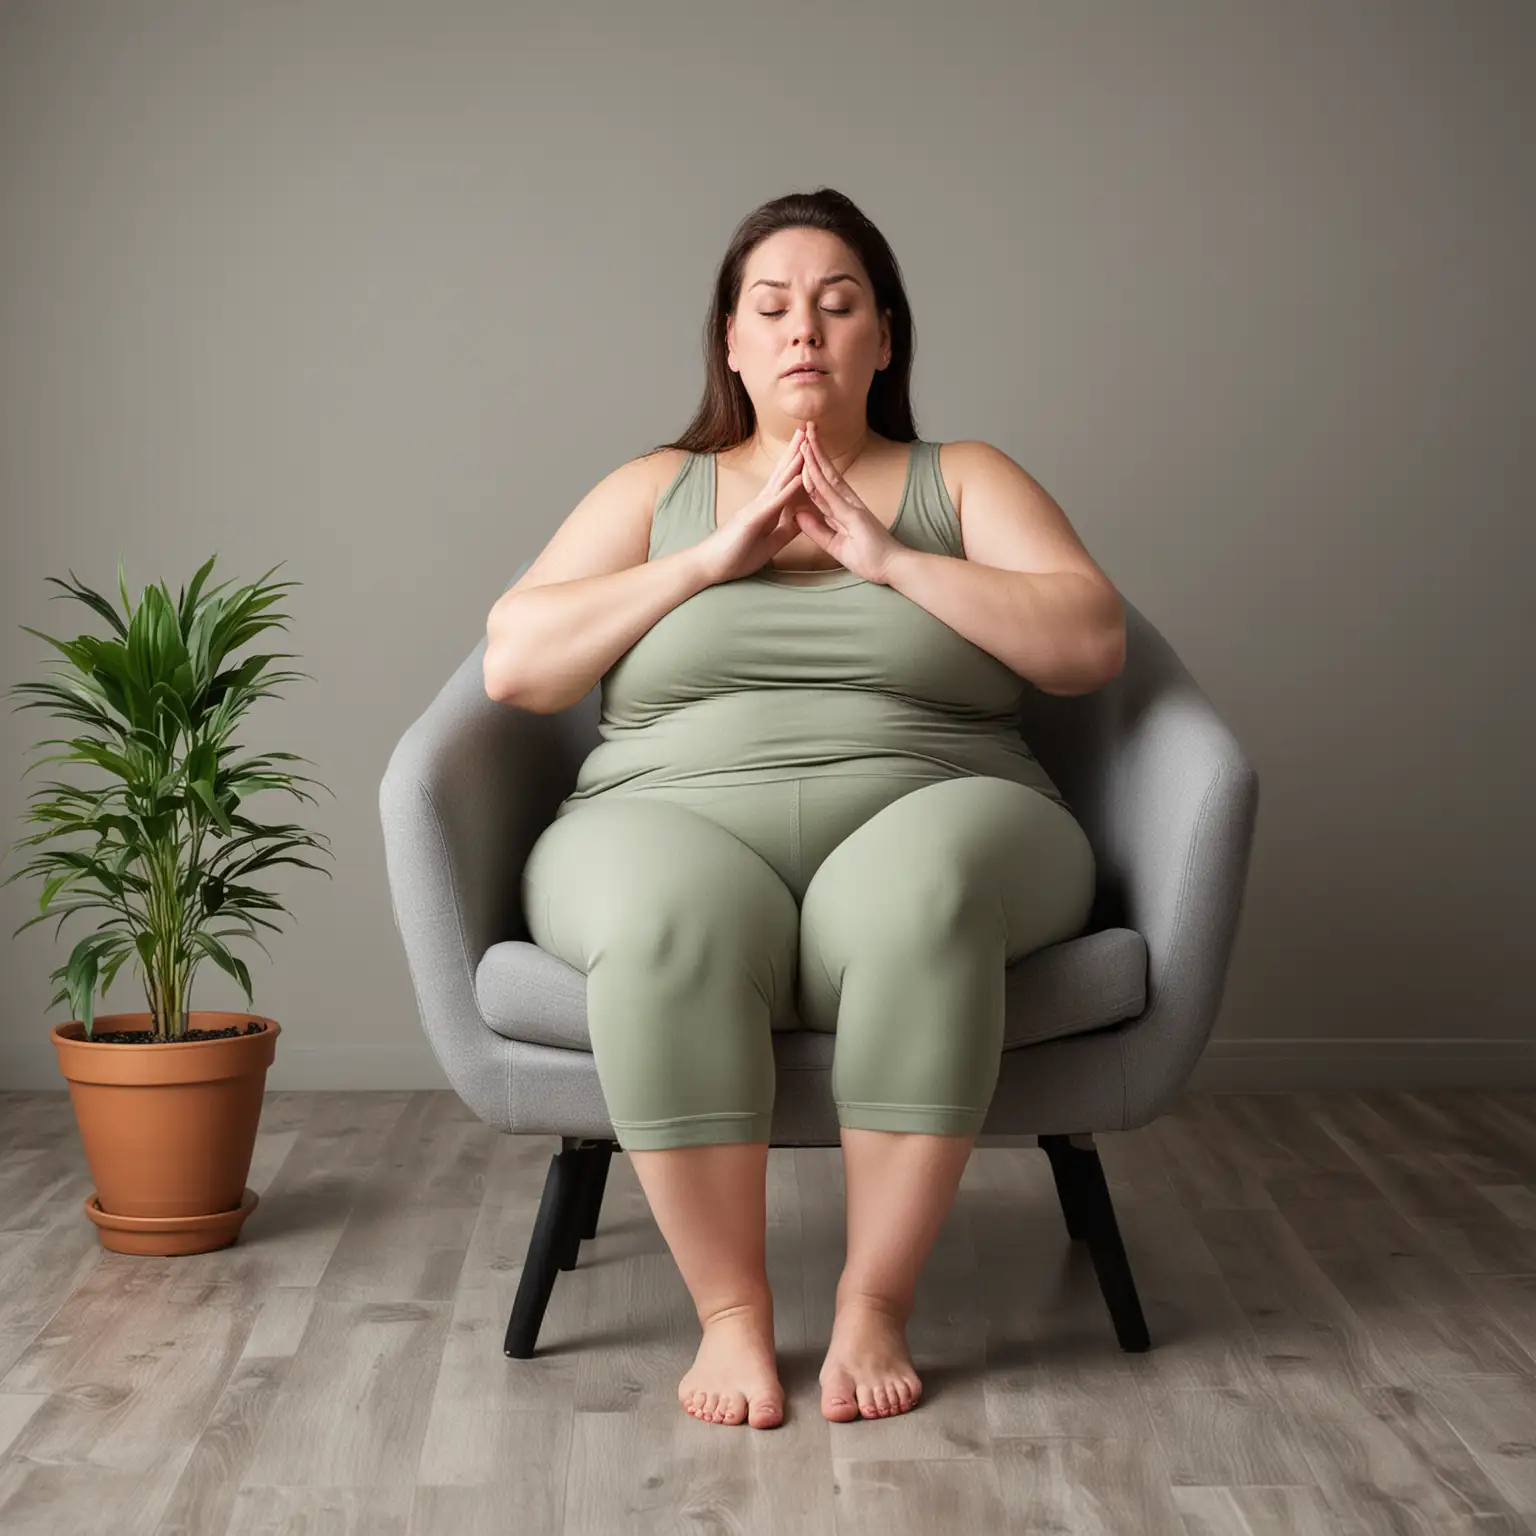 Woman Overcoming Weight Struggles Through Meditation